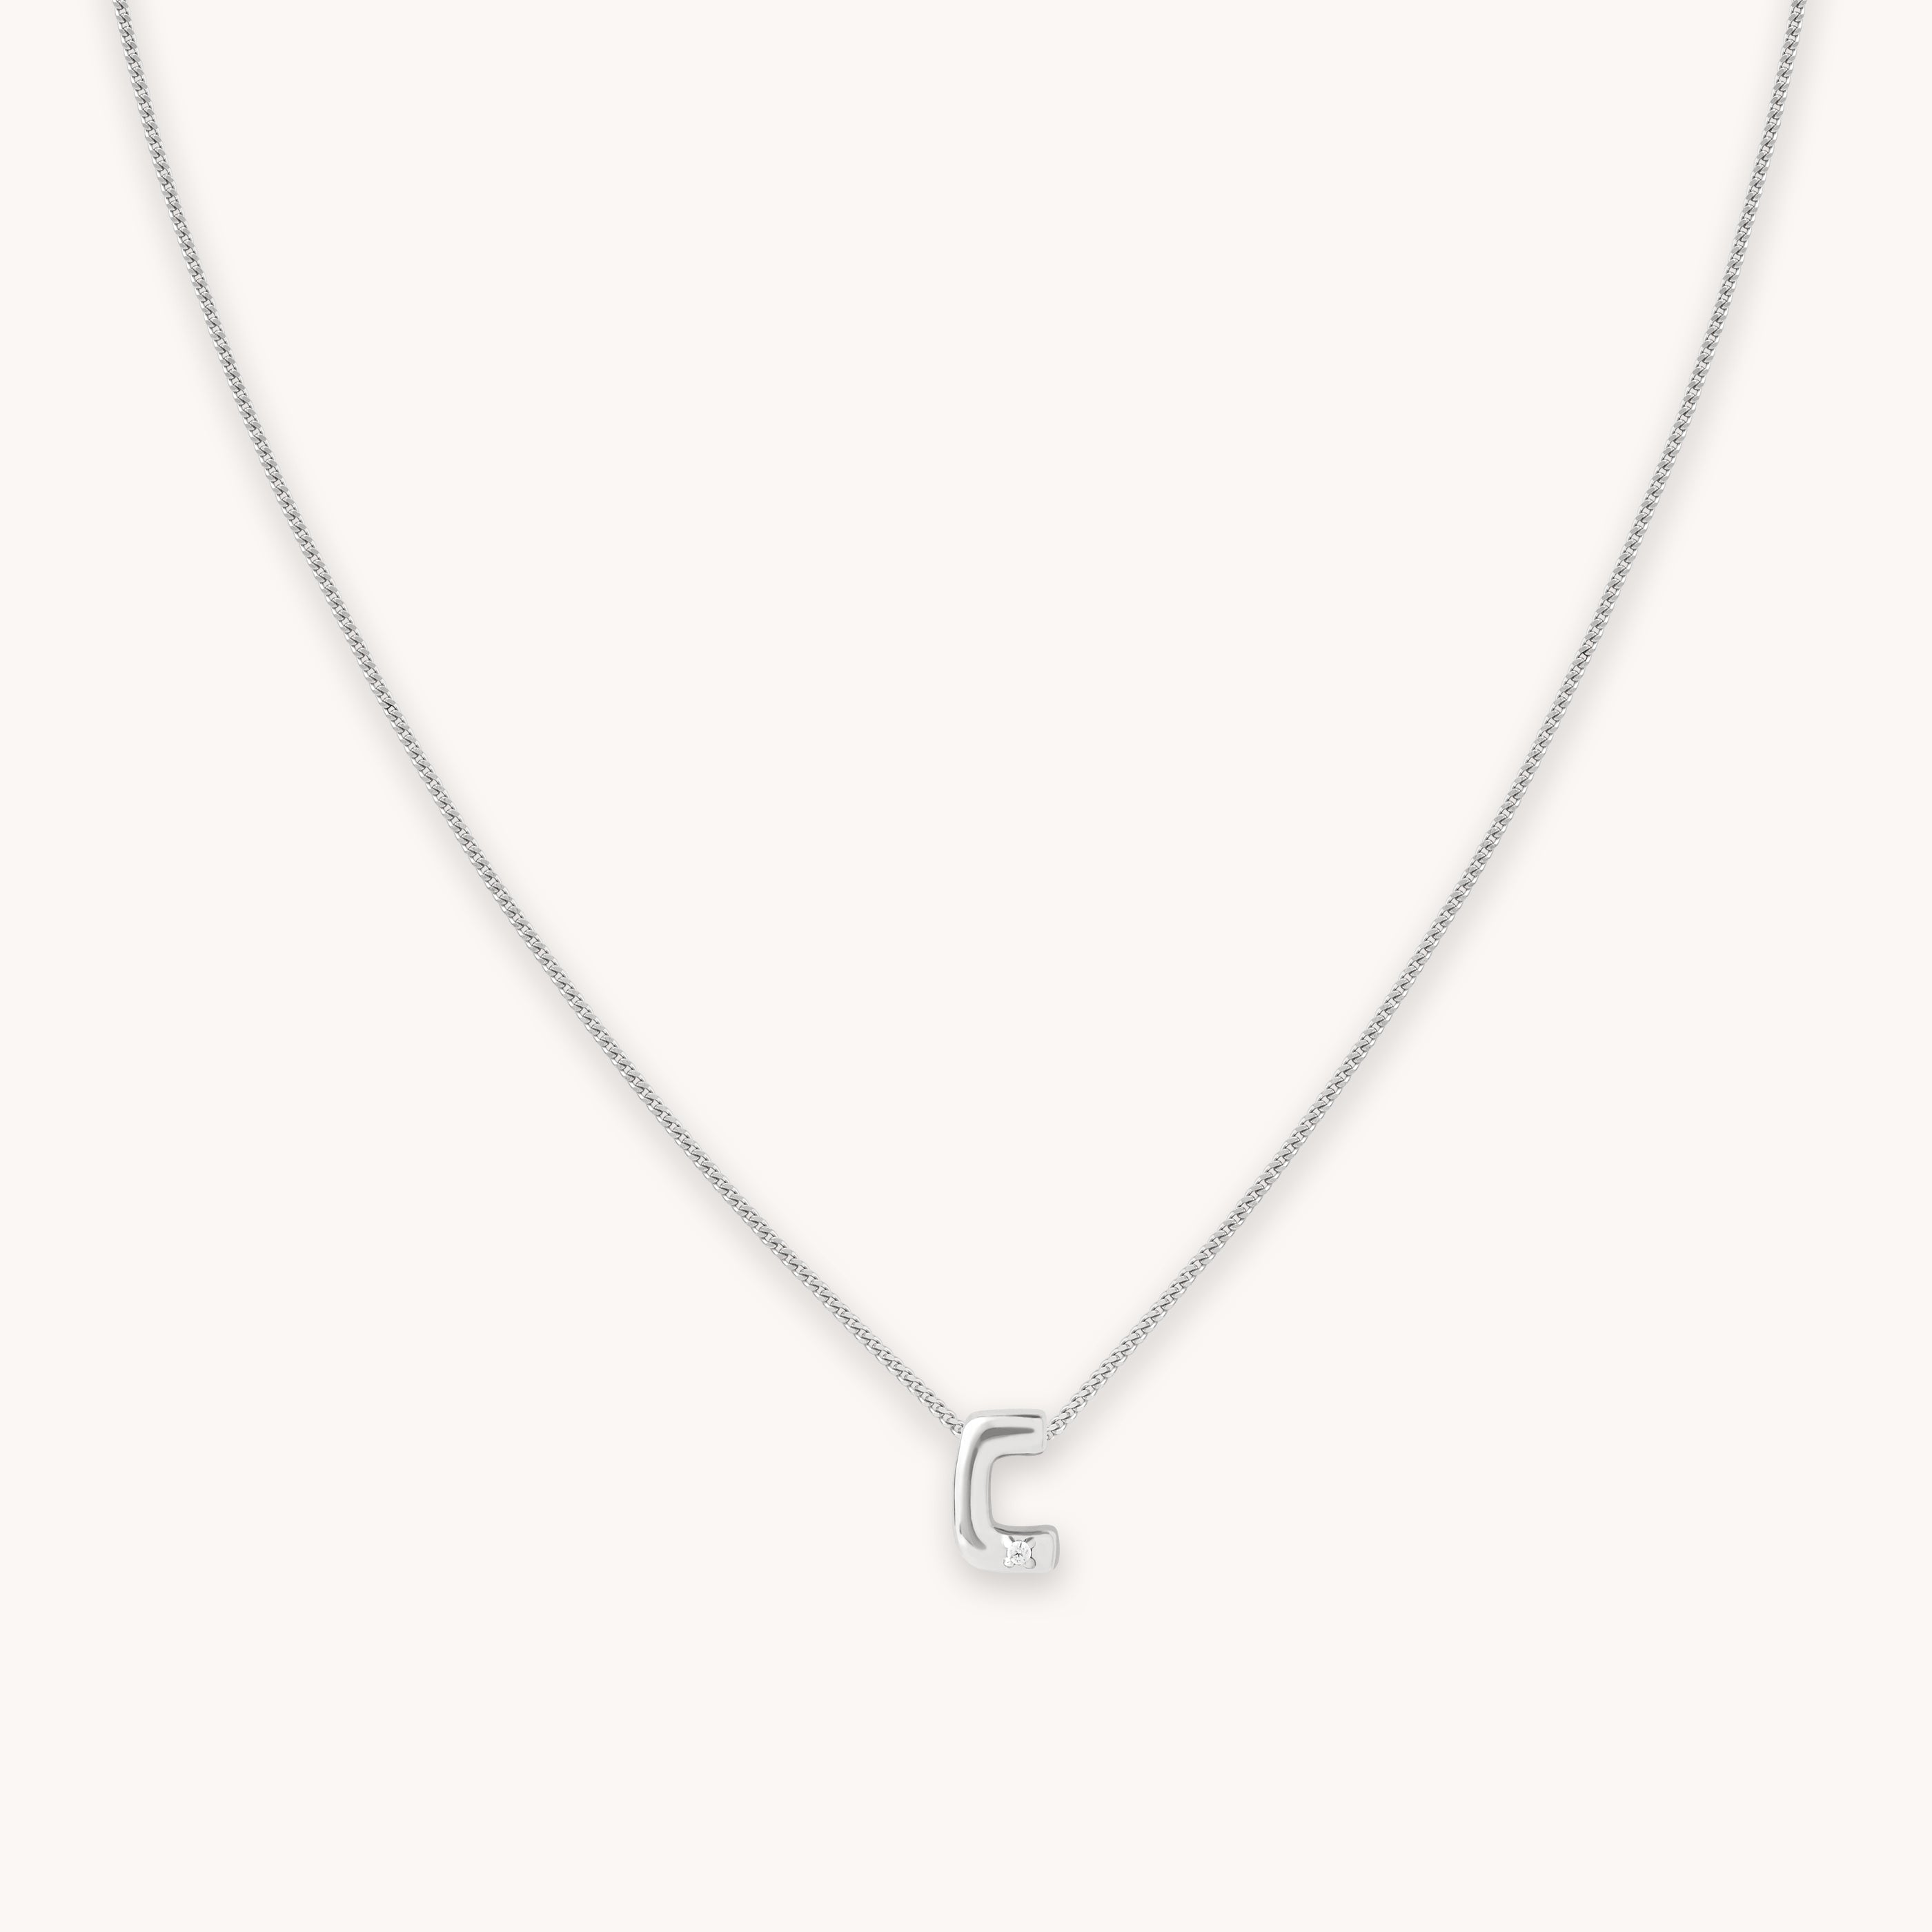 Monogram Necklace - C